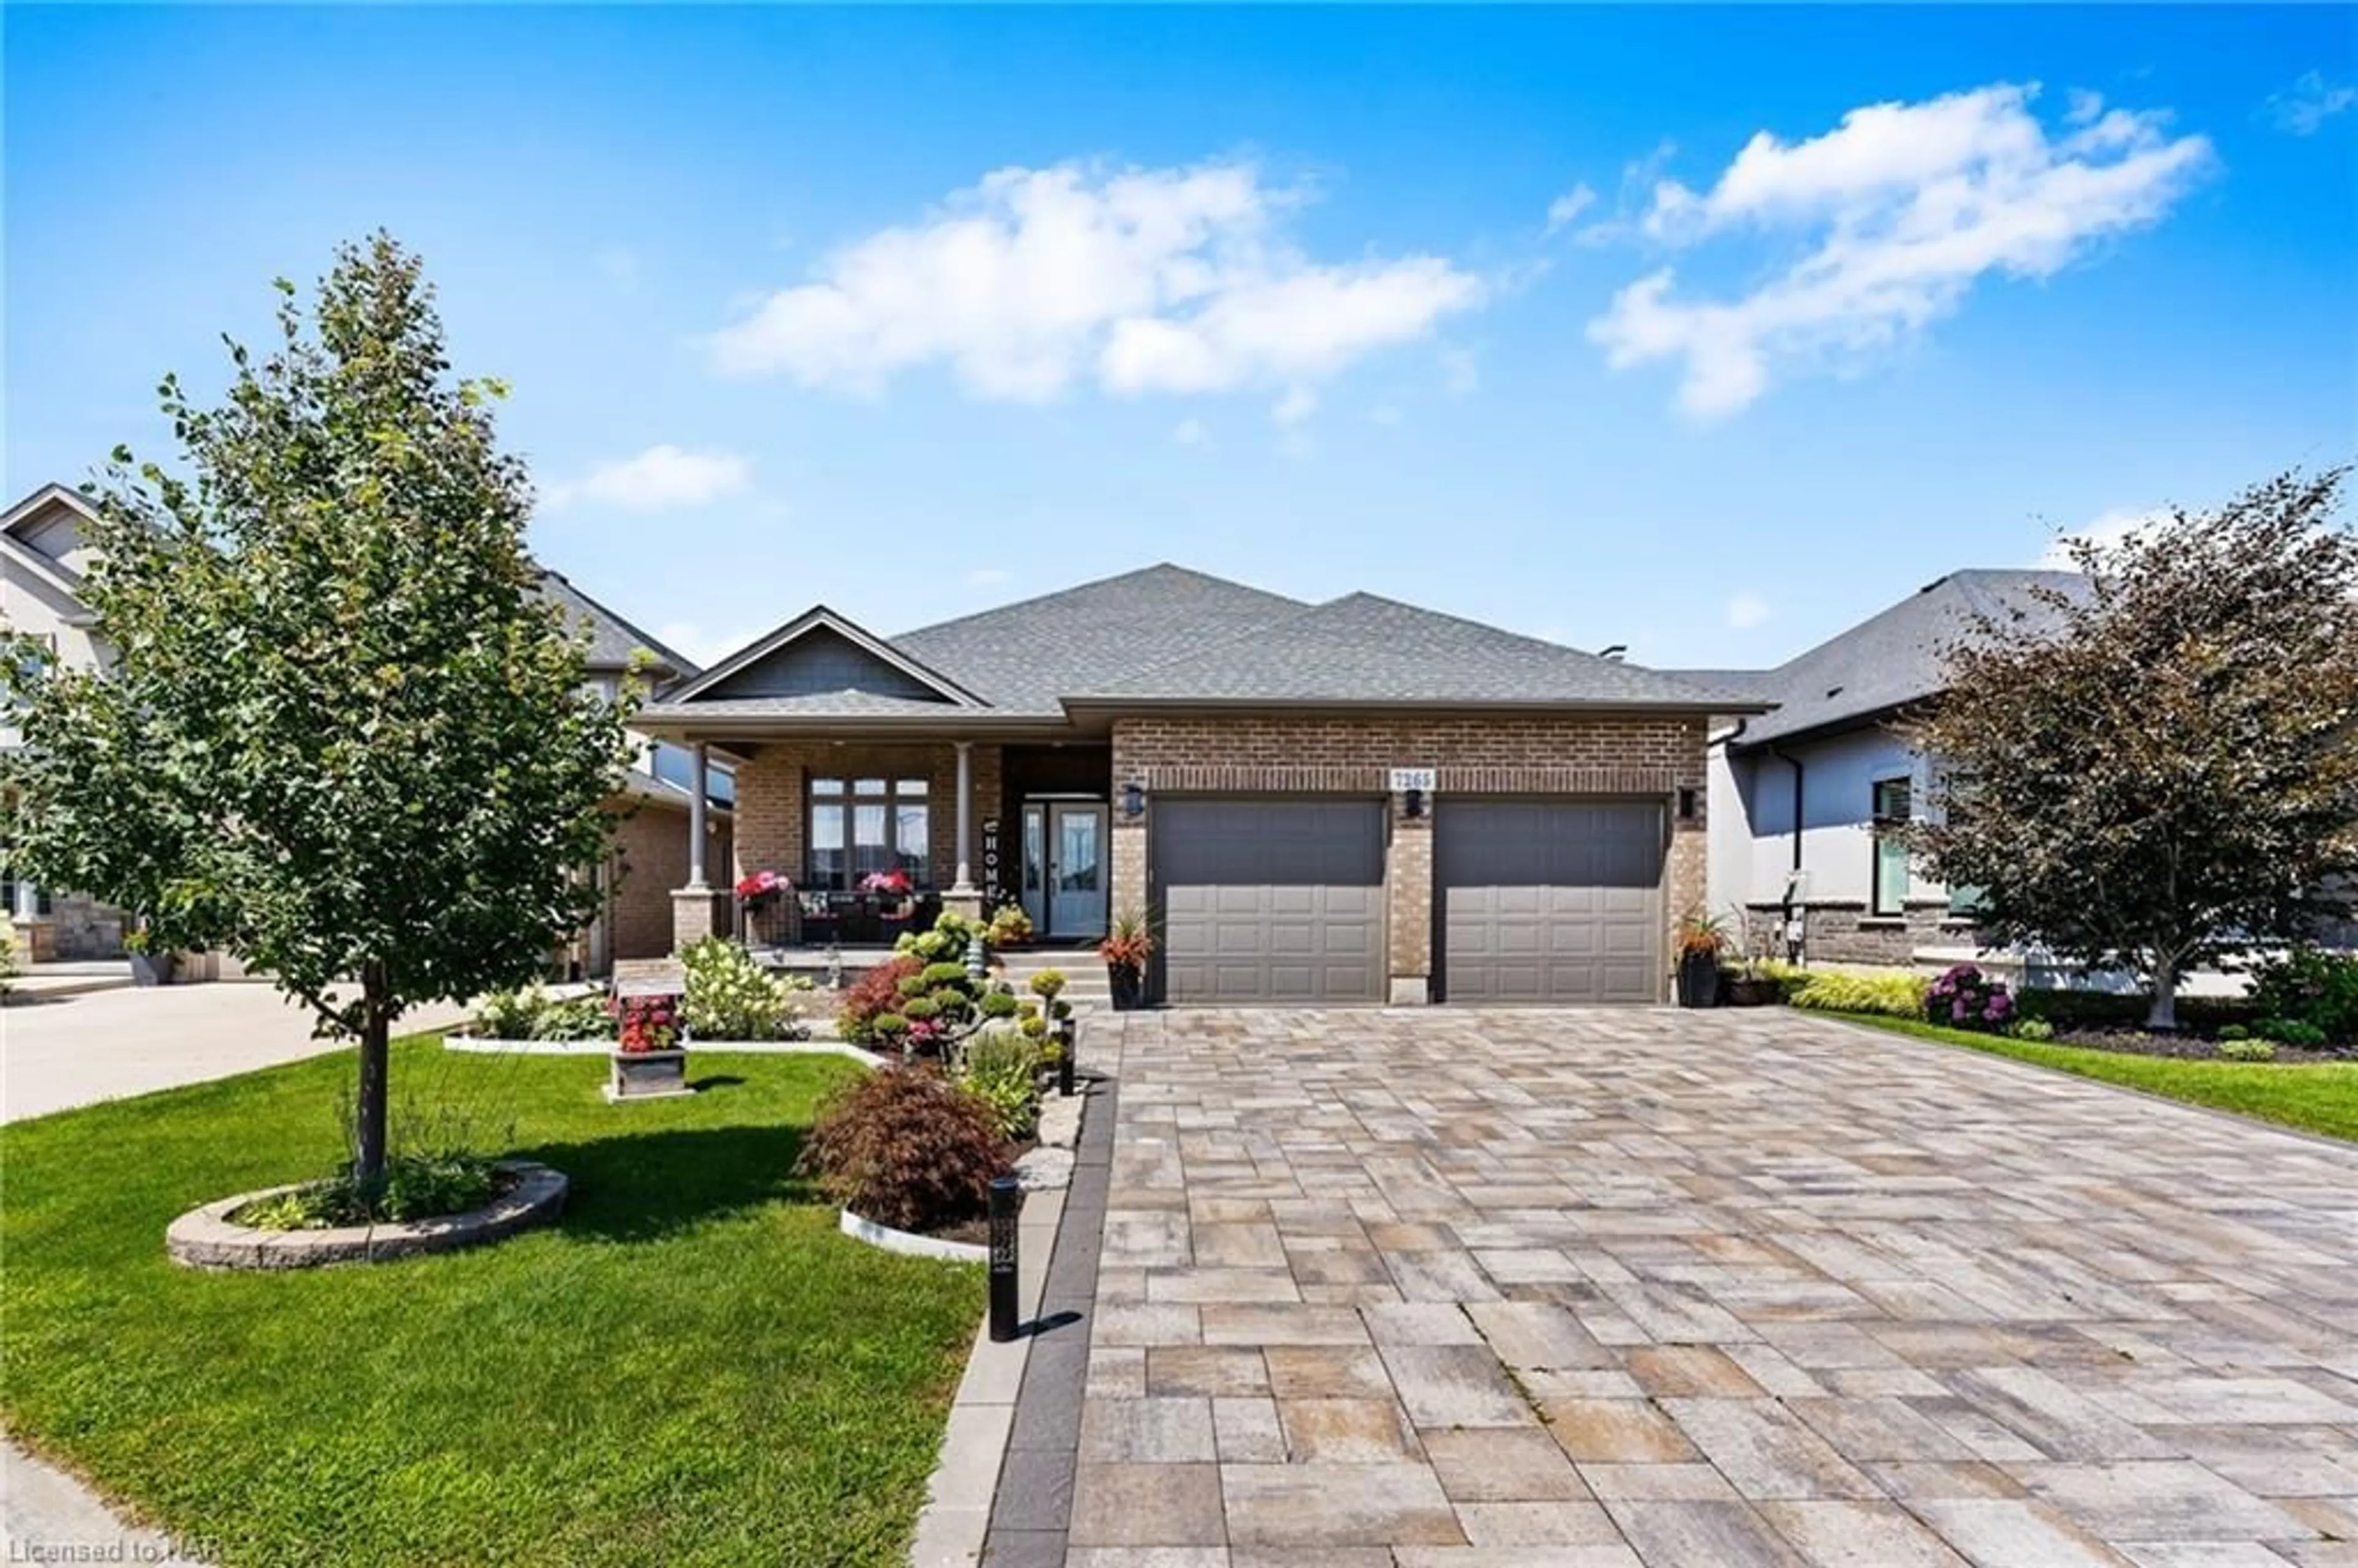 Frontside or backside of a home for 7265 Optimist Lane Lane, Niagara Falls Ontario L2E 0B1